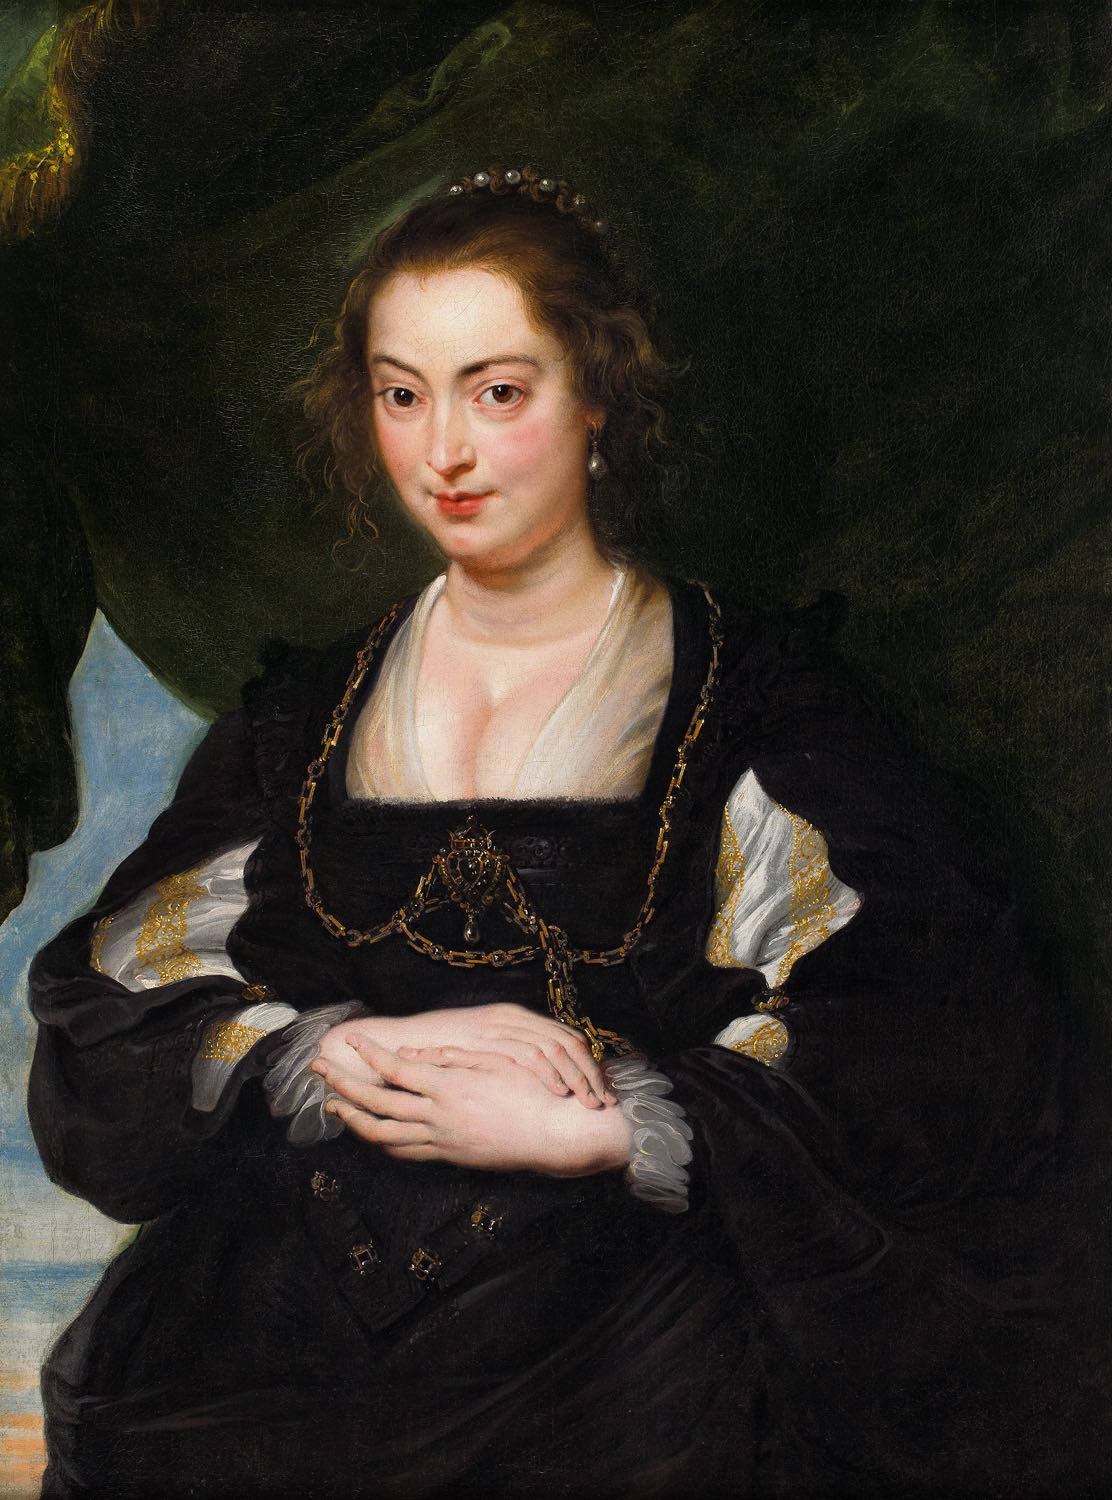 Peter Paul Rubens: Portrét dámy, 1620-25, olej na plátně, 98 x 73,8 cm,  cena: 75 888 000 korun (14 400 000 PLN) DESA Unicum Varšava 17. 3. 2022